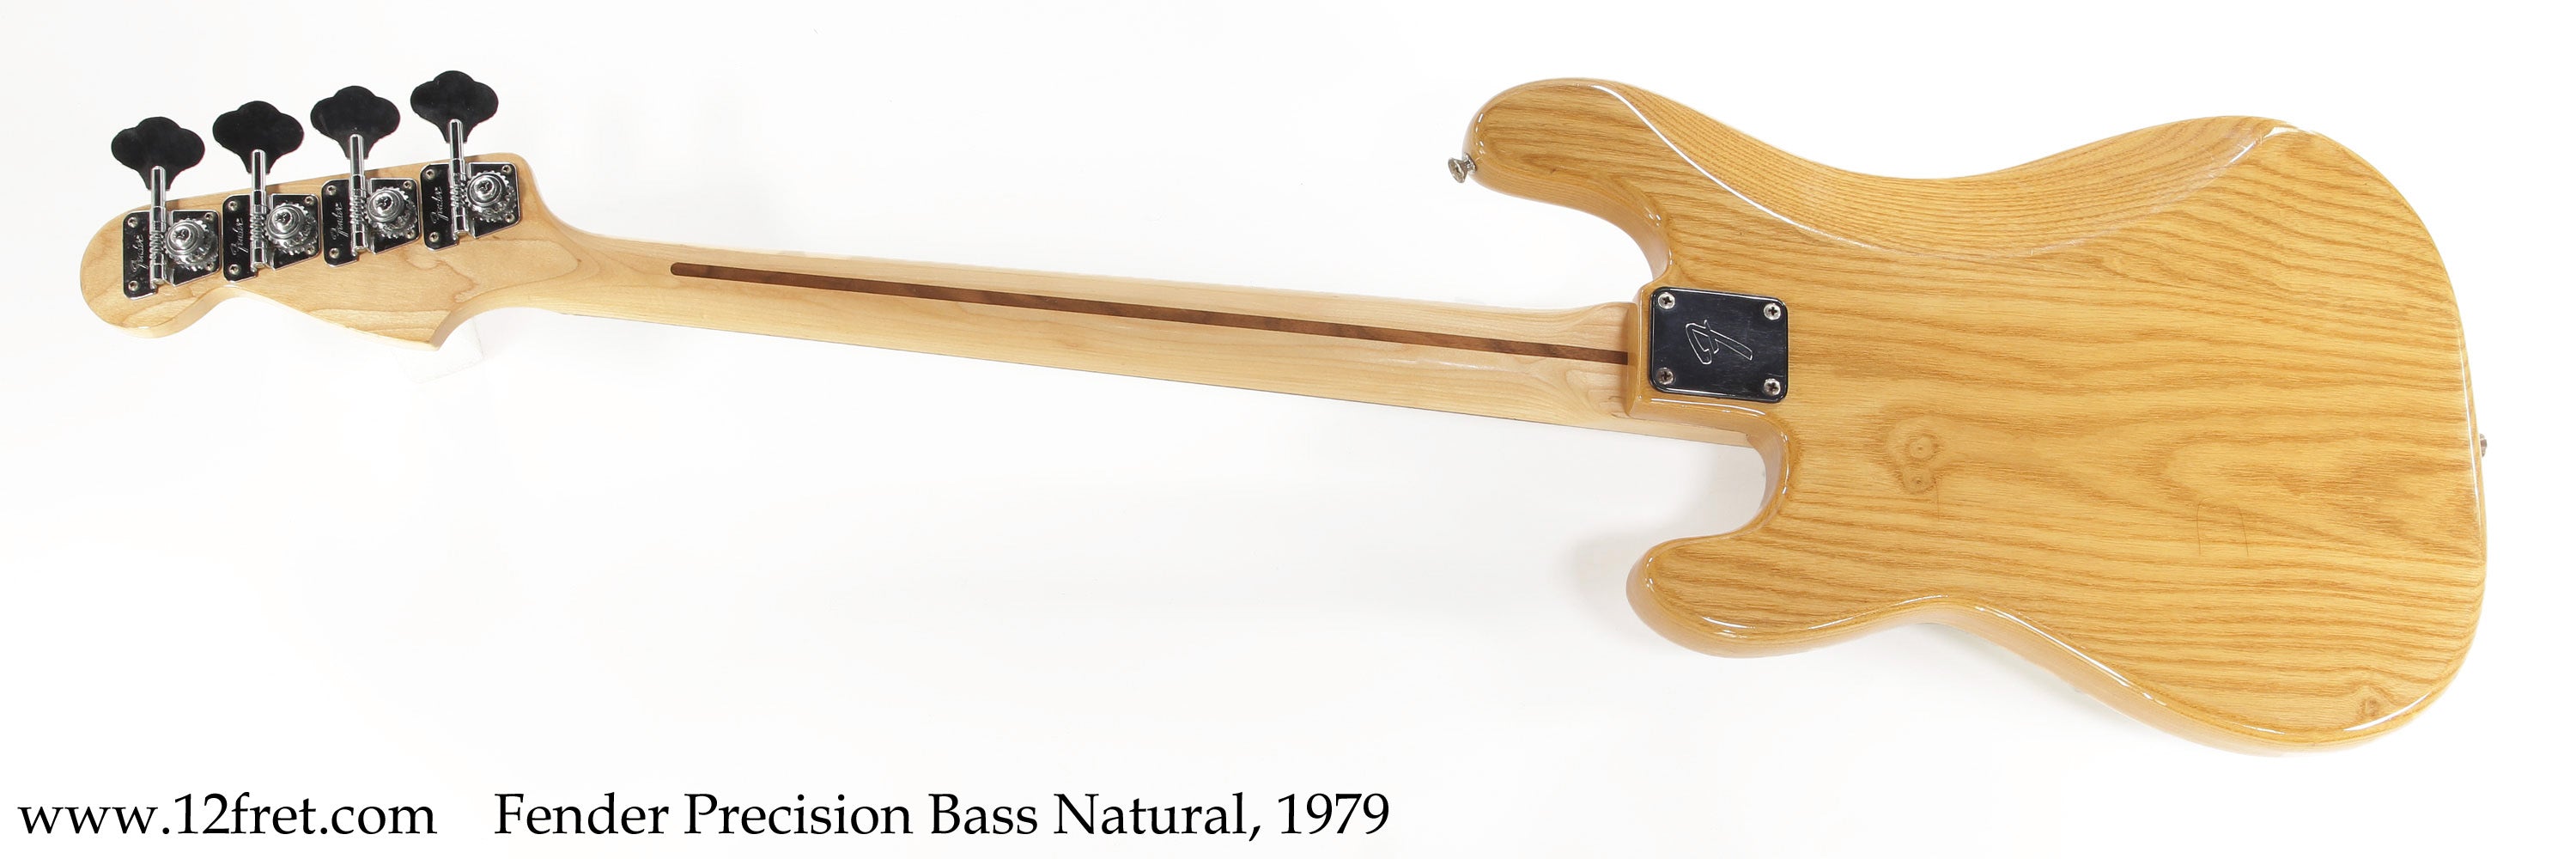 Fender Precision Bass Natural, 1979  - The Twelfth  Fret